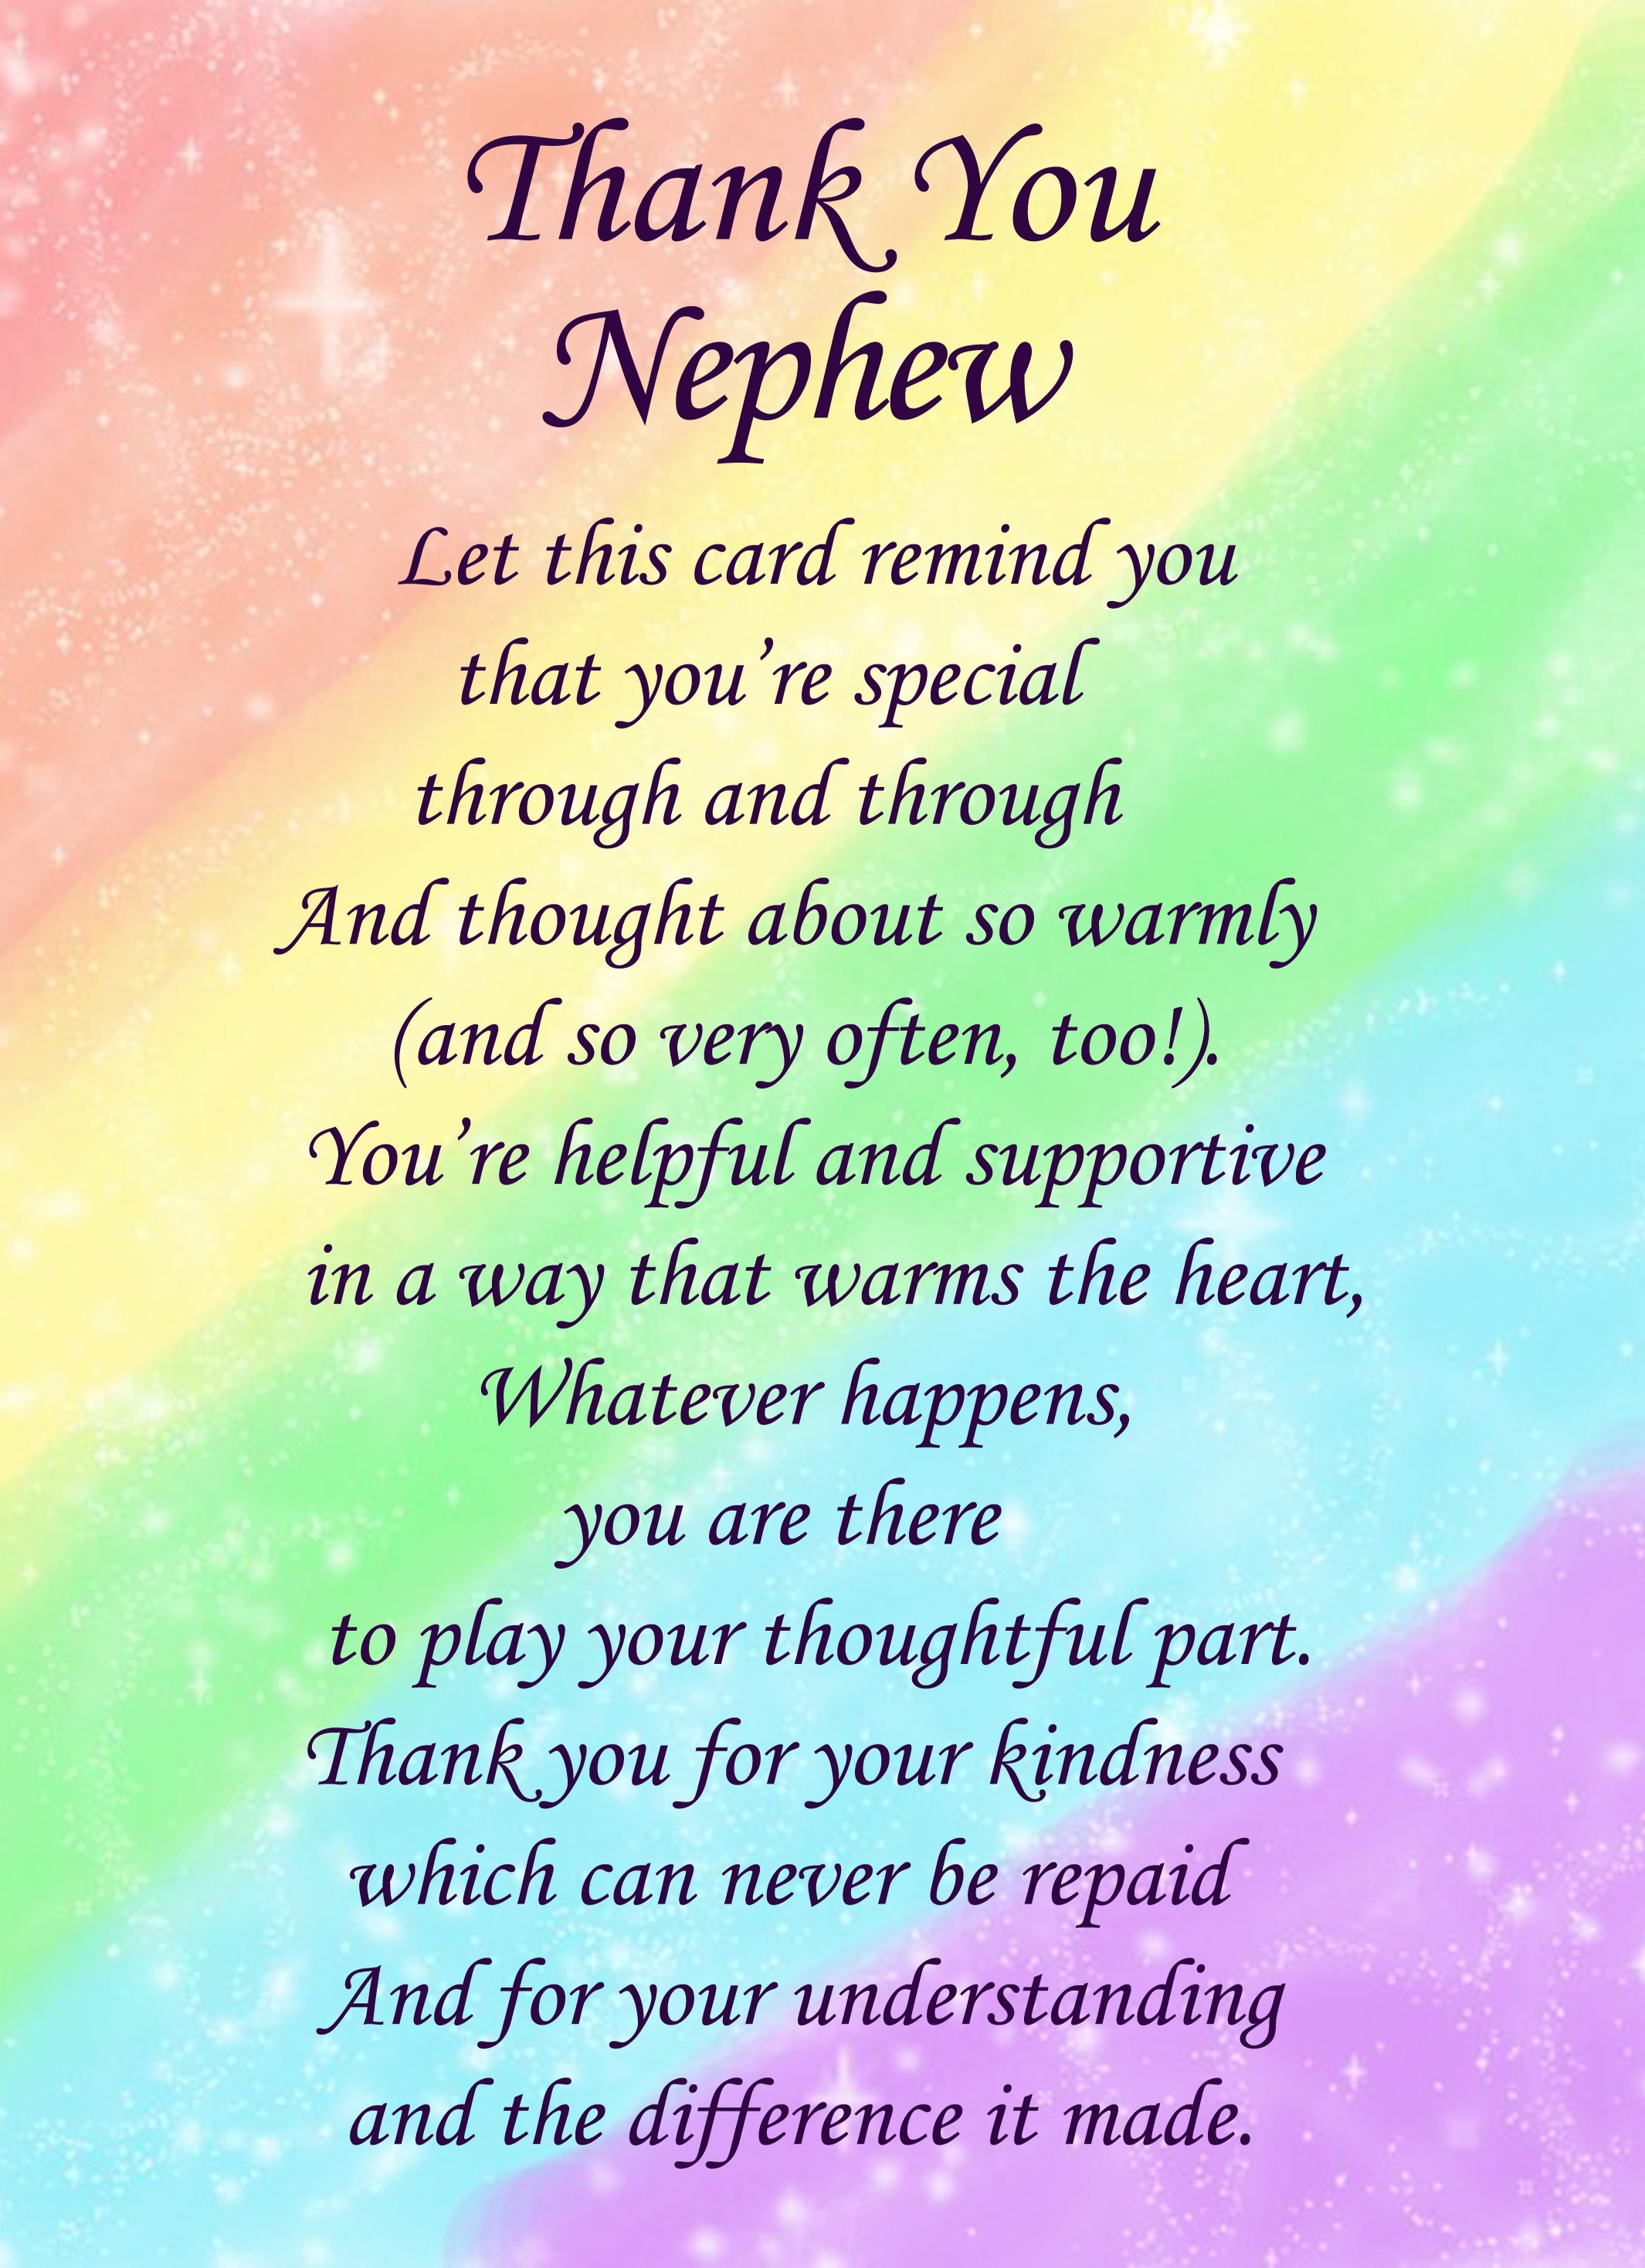 Thank You 'Nephew' Poem Verse Greeting Card